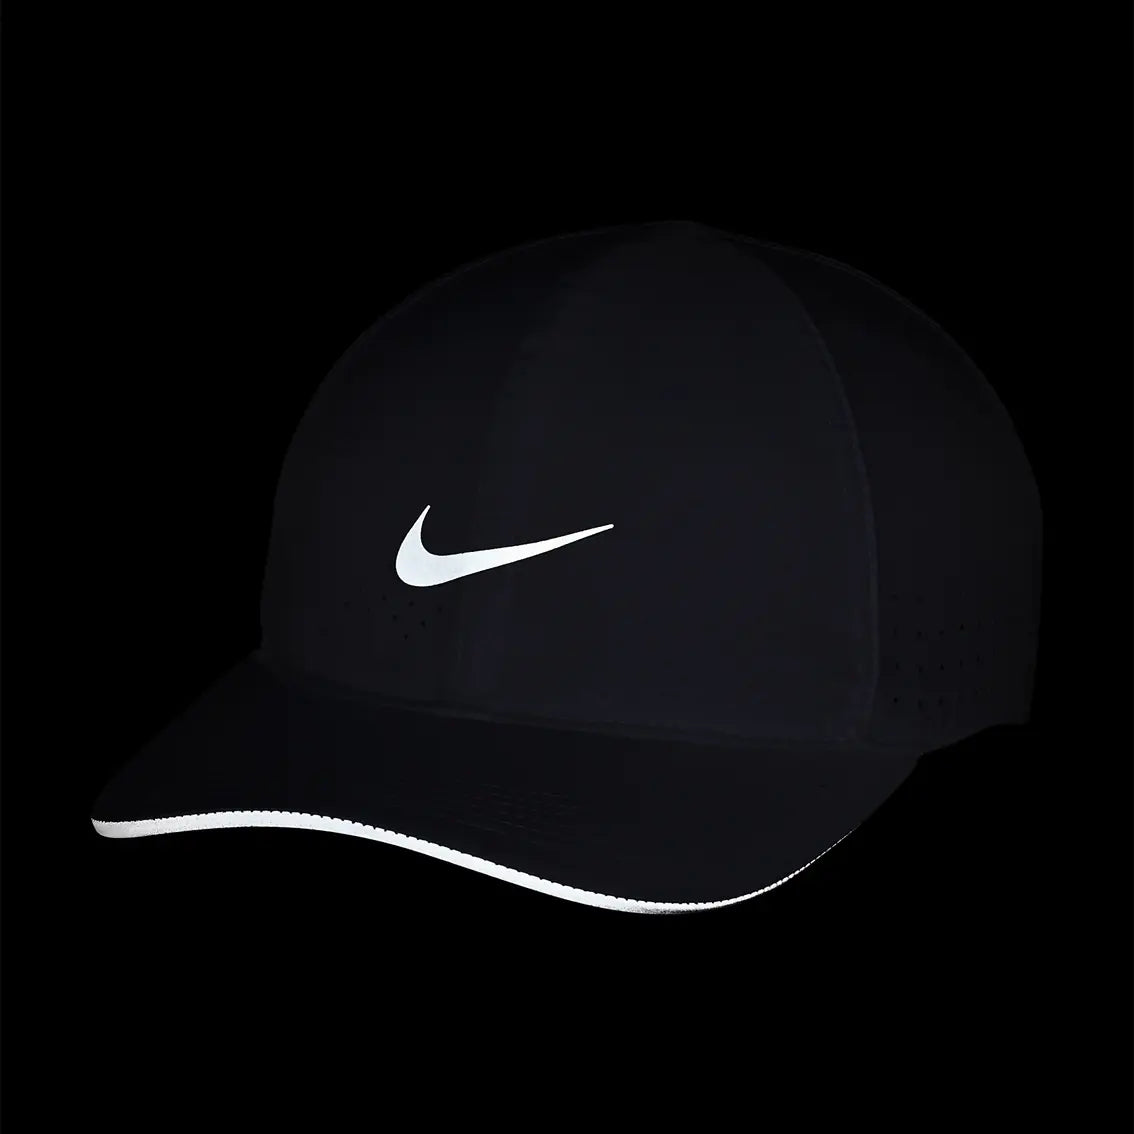 Nike AeroBill Featherlight Perforated Running Cap - White